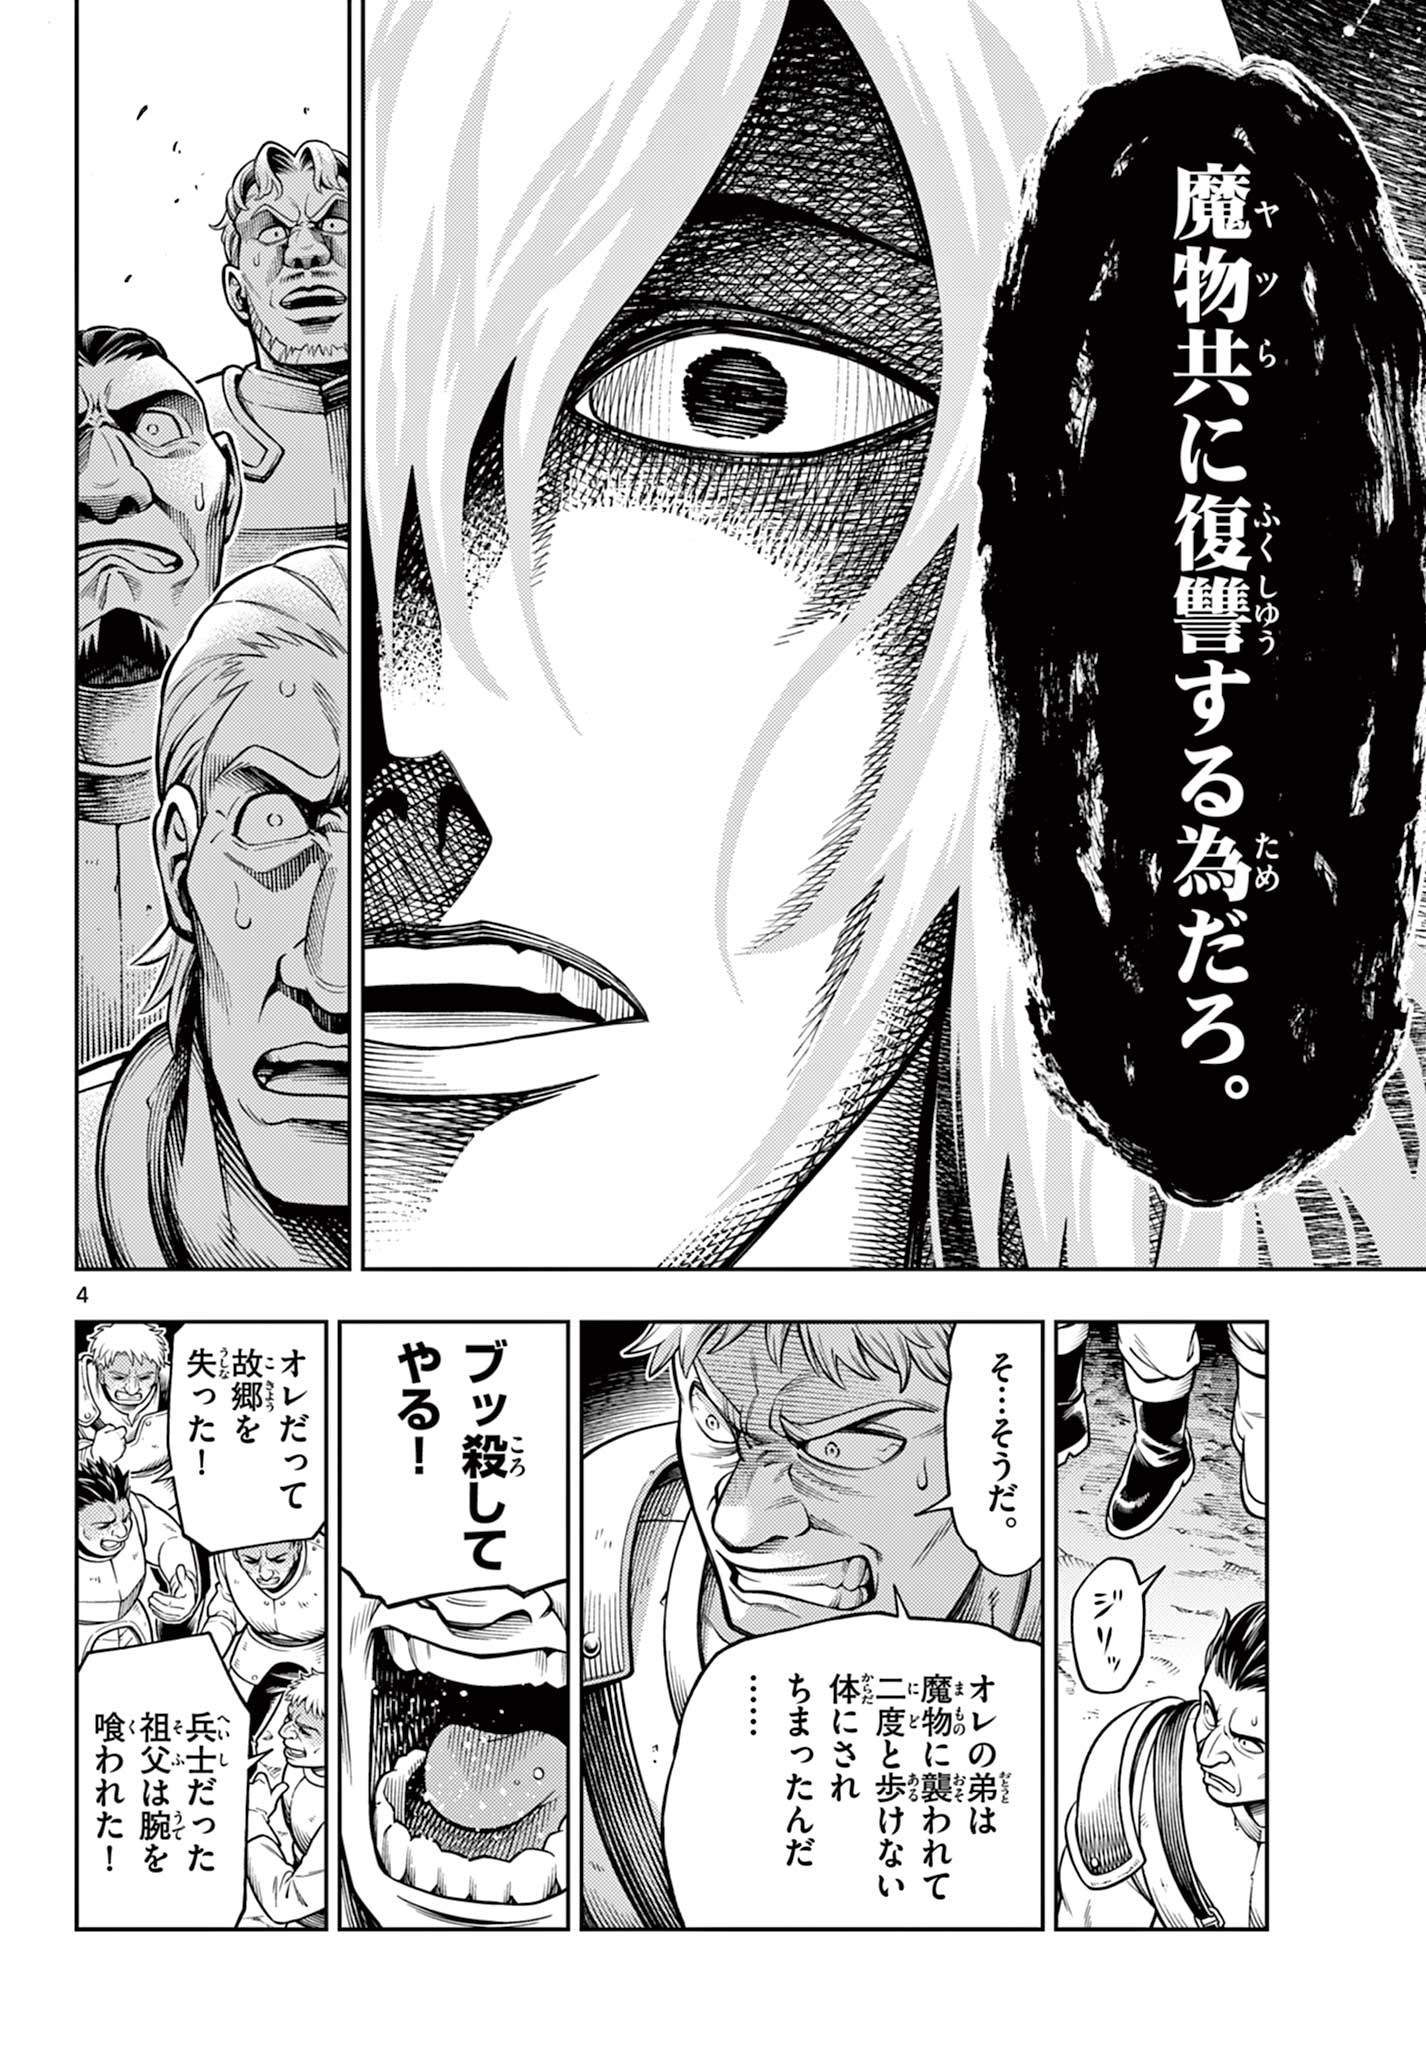 Soara to Mamono no ie - Chapter 28 - Page 4